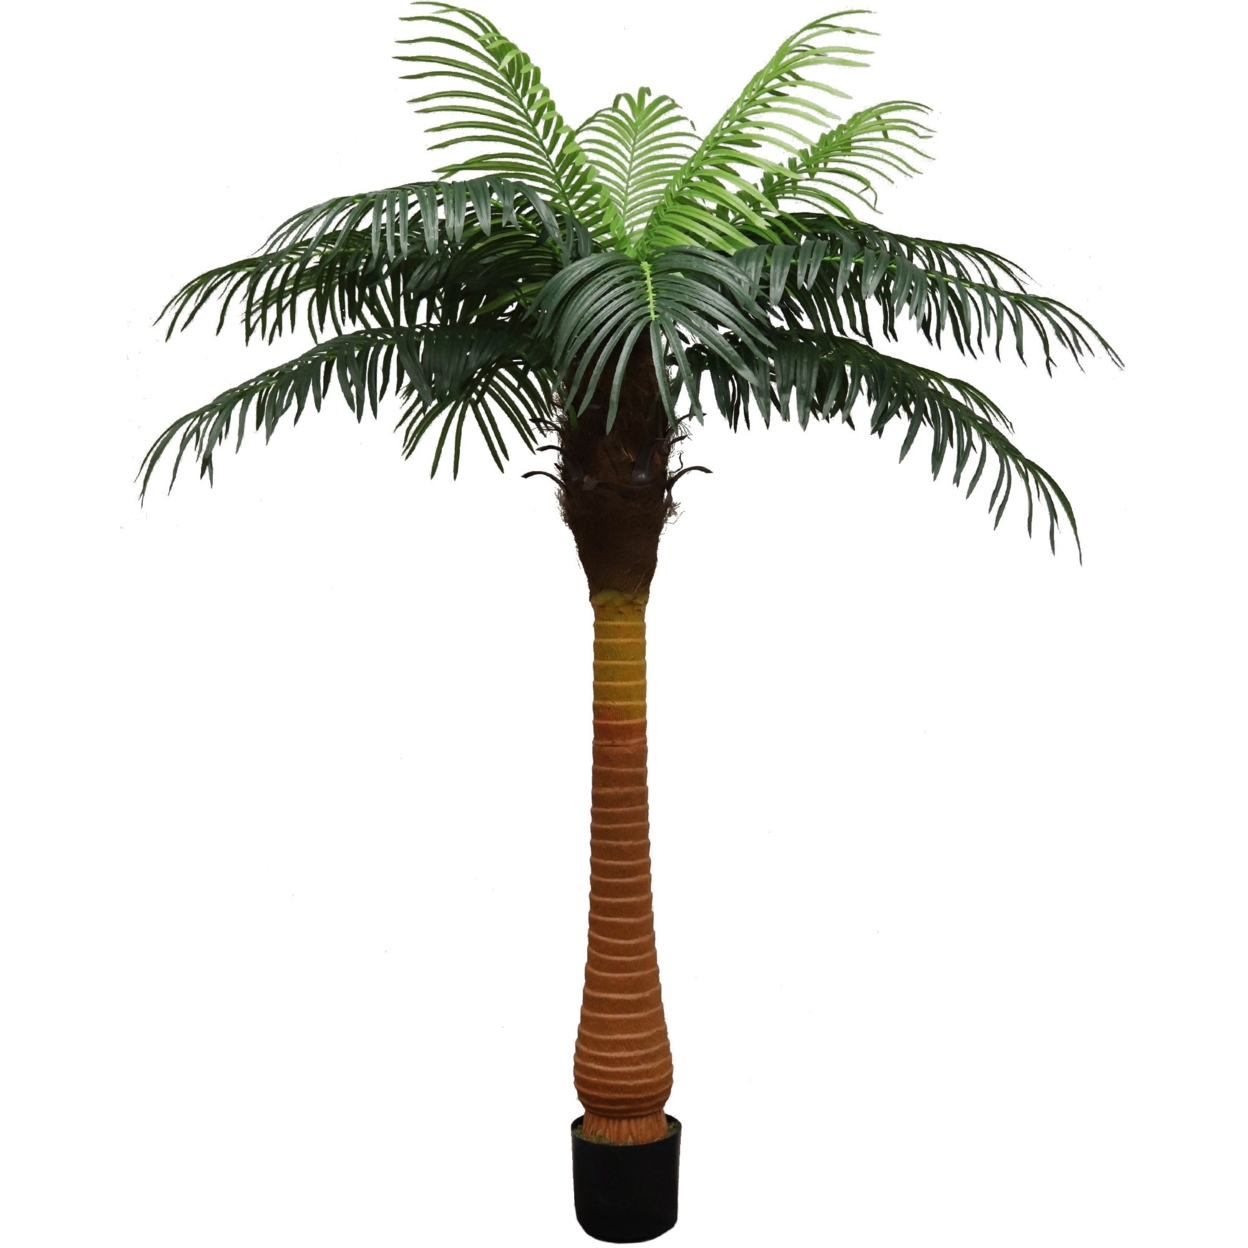 Artificial Areca Palm Tree in Black Pot- 6' - 1 Piece